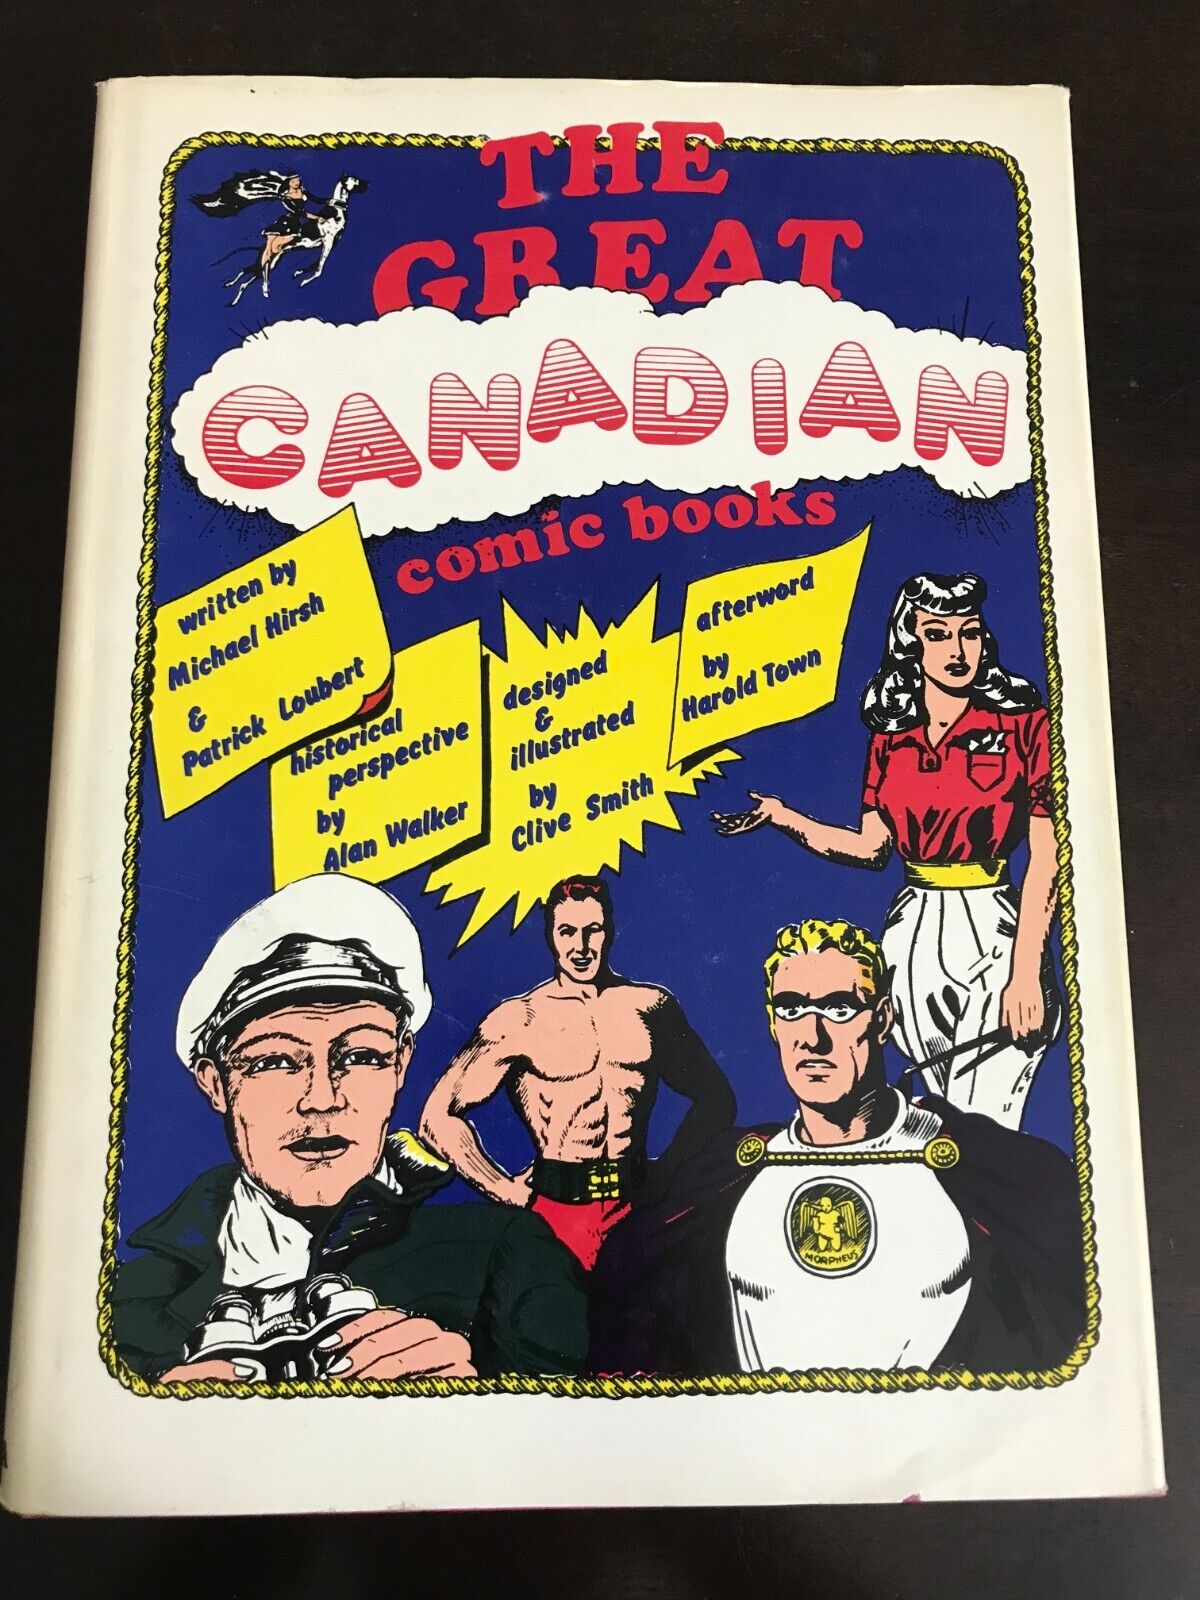 THE GREAT CANADIAN COMIC BOOKS Hirsh & Loubert PMA 1971